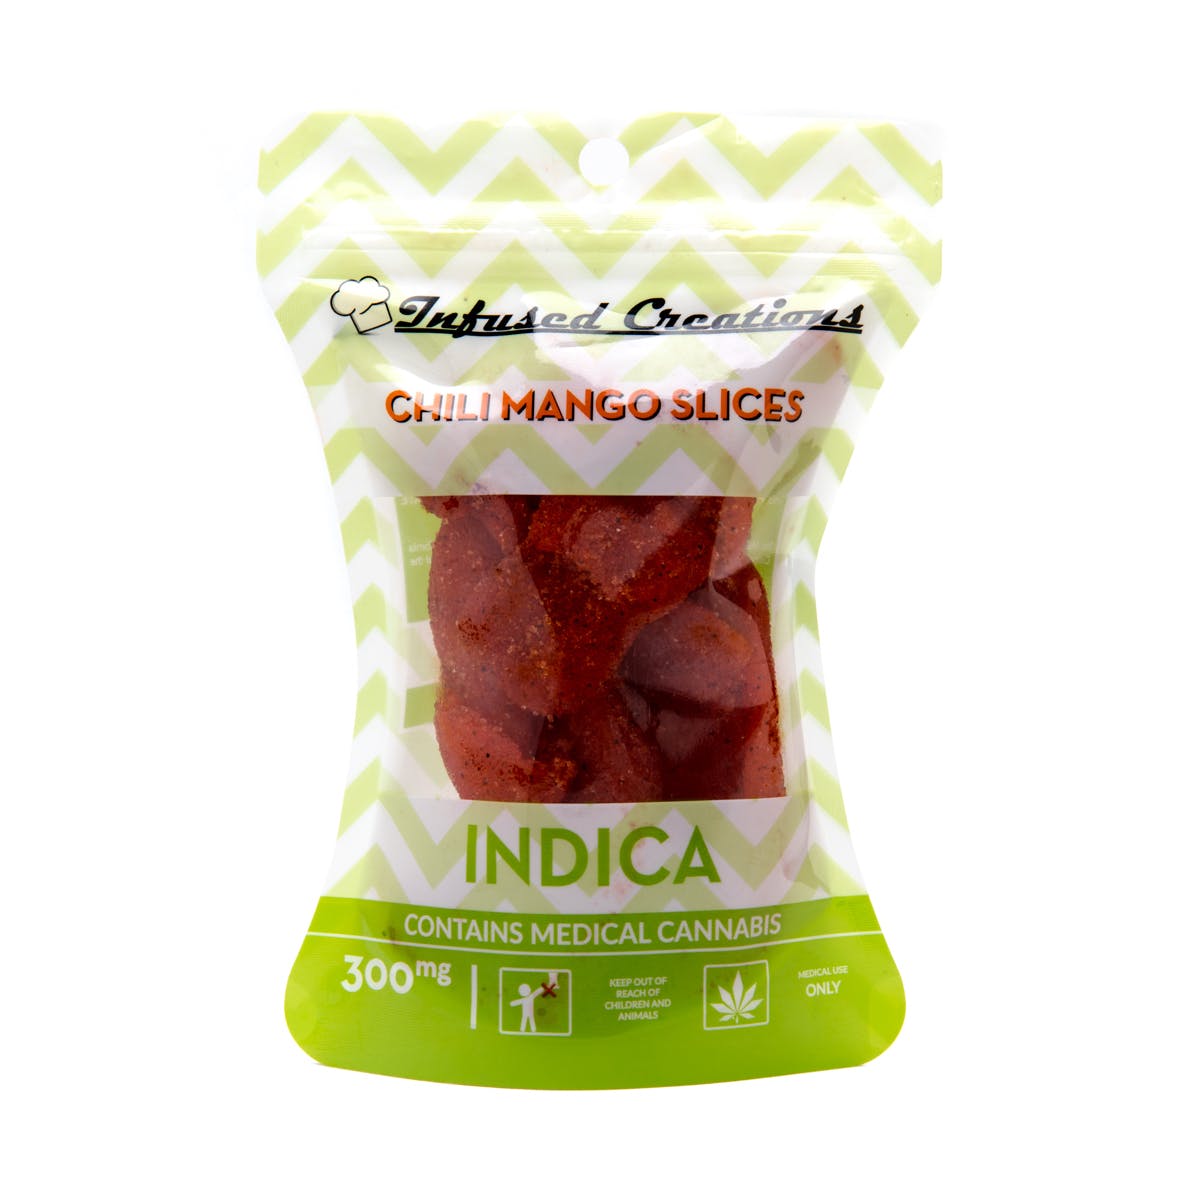 Chili Mango Slices Indica, 300mg